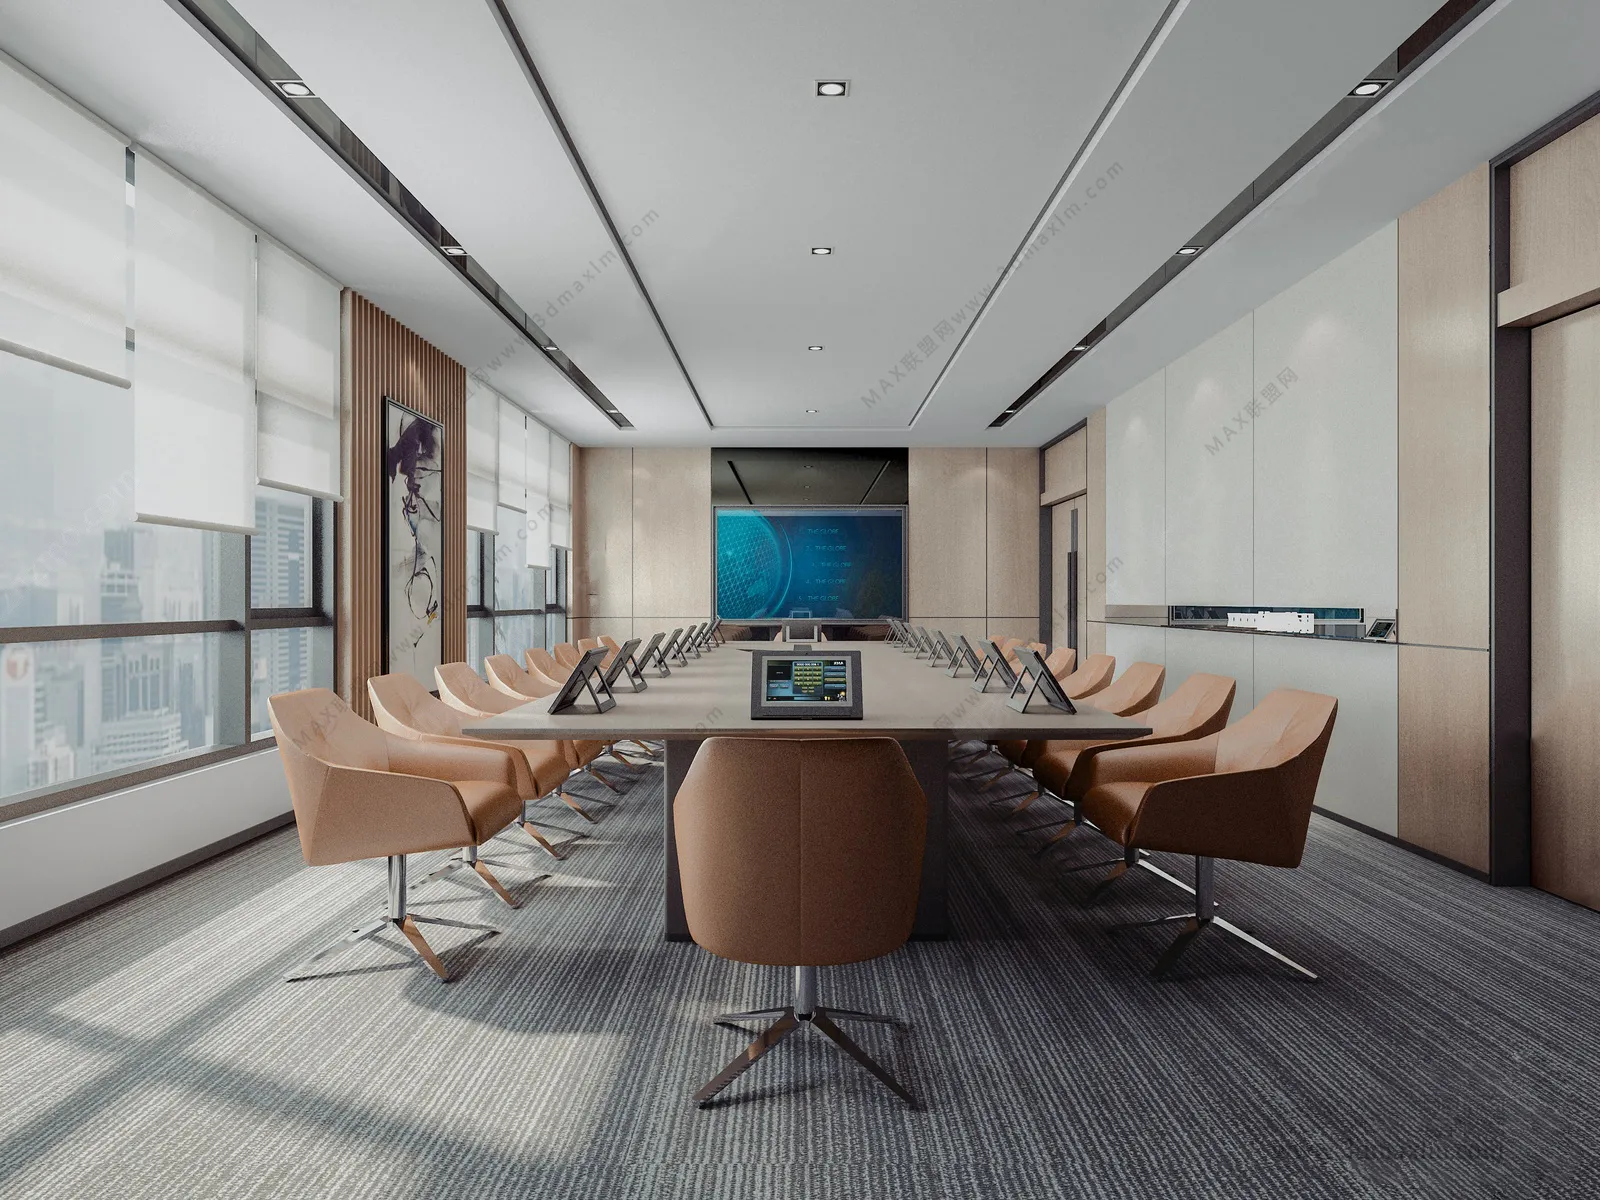 3D OFFICE INTERIOR (VRAY) – MEETING ROOM 3D SCENES – 007